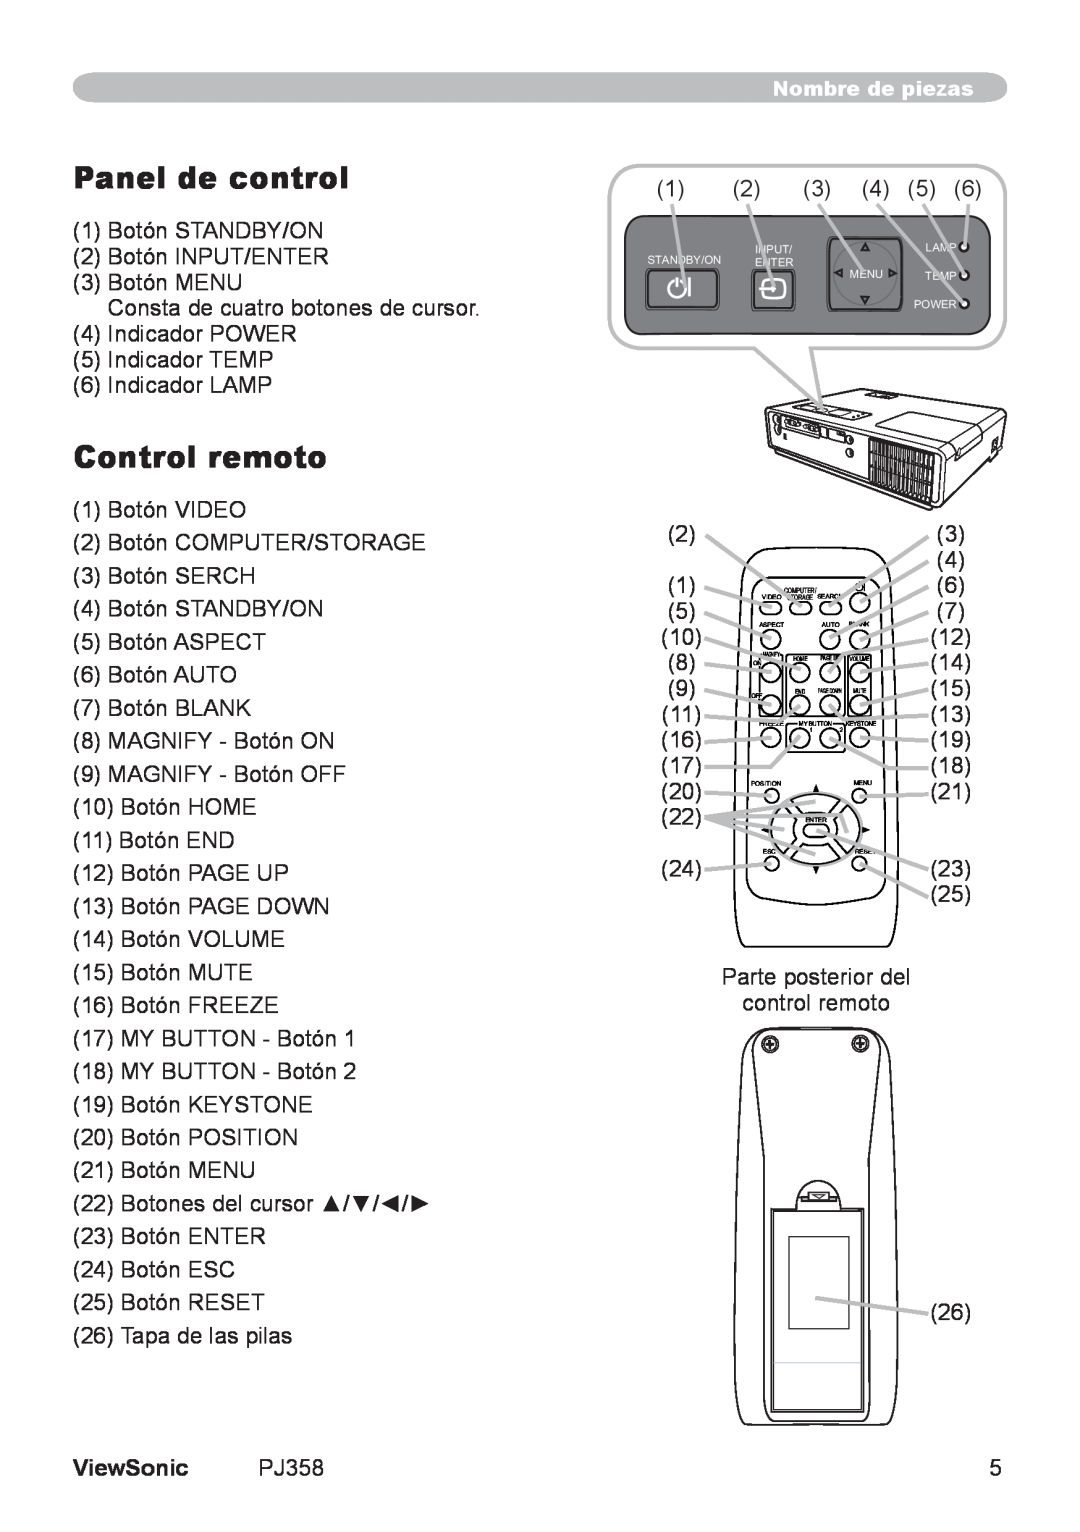 ViewSonic VS11611 manual Panel de control, Control remoto, ViewSonic PJ358 